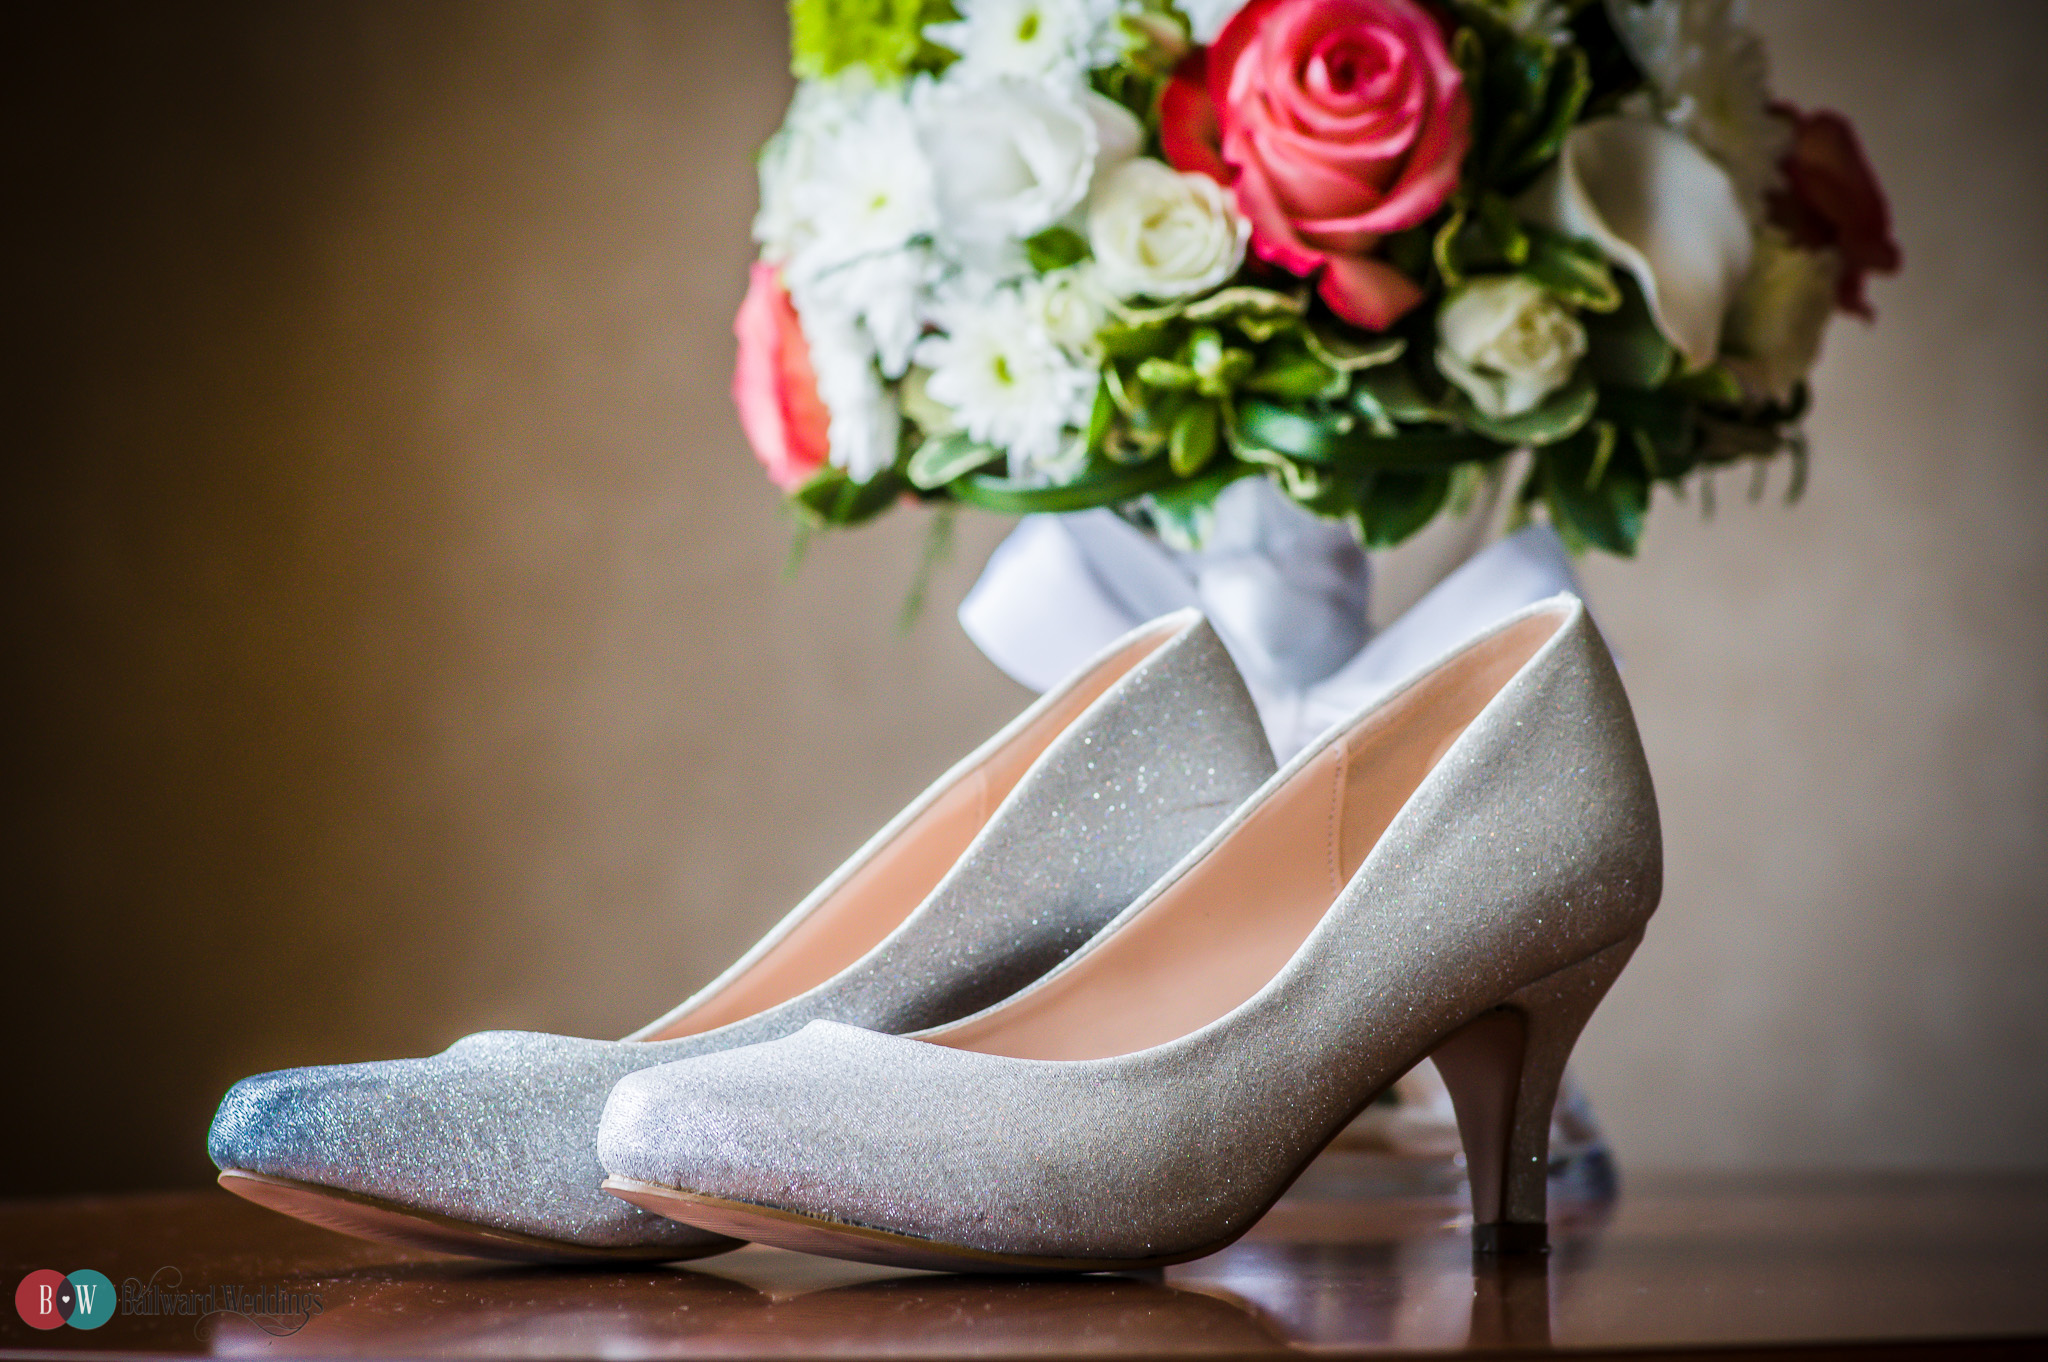 Wedding high heels in front of wedding bouquet in Harrison Hot Springs